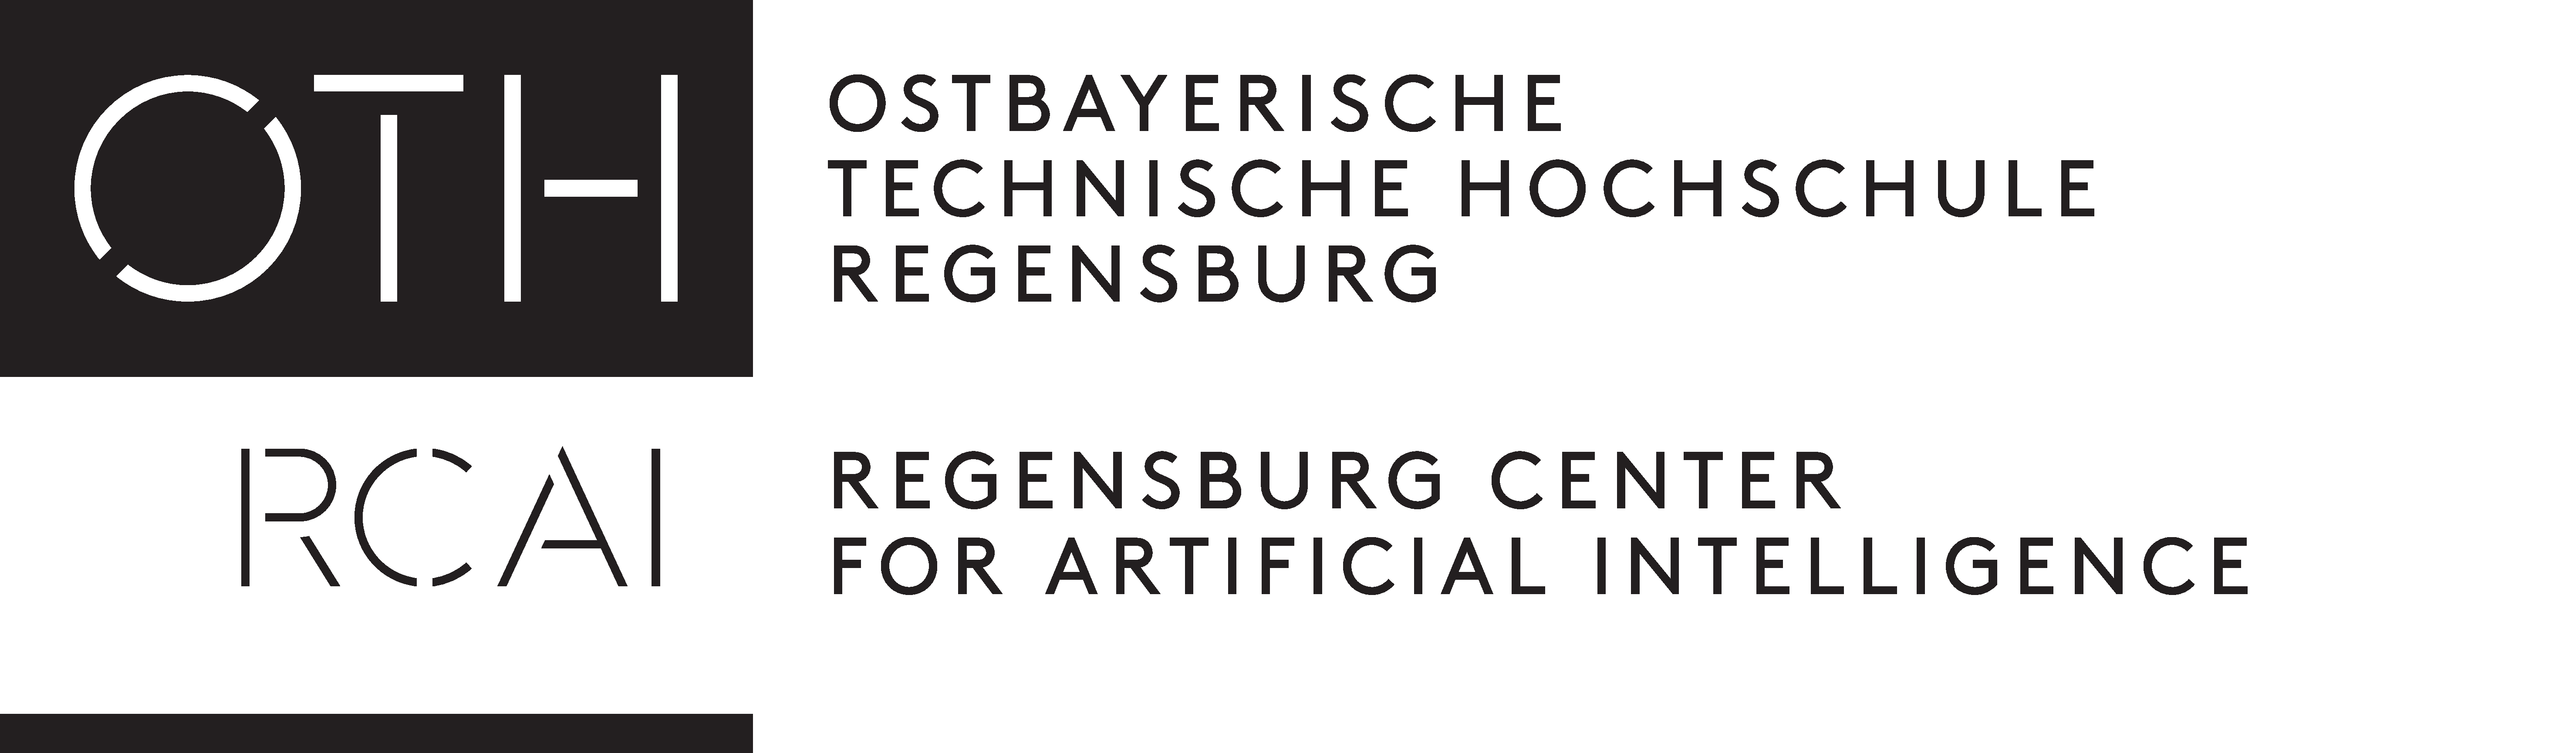 Regensburg Center for Artificial Intelligence